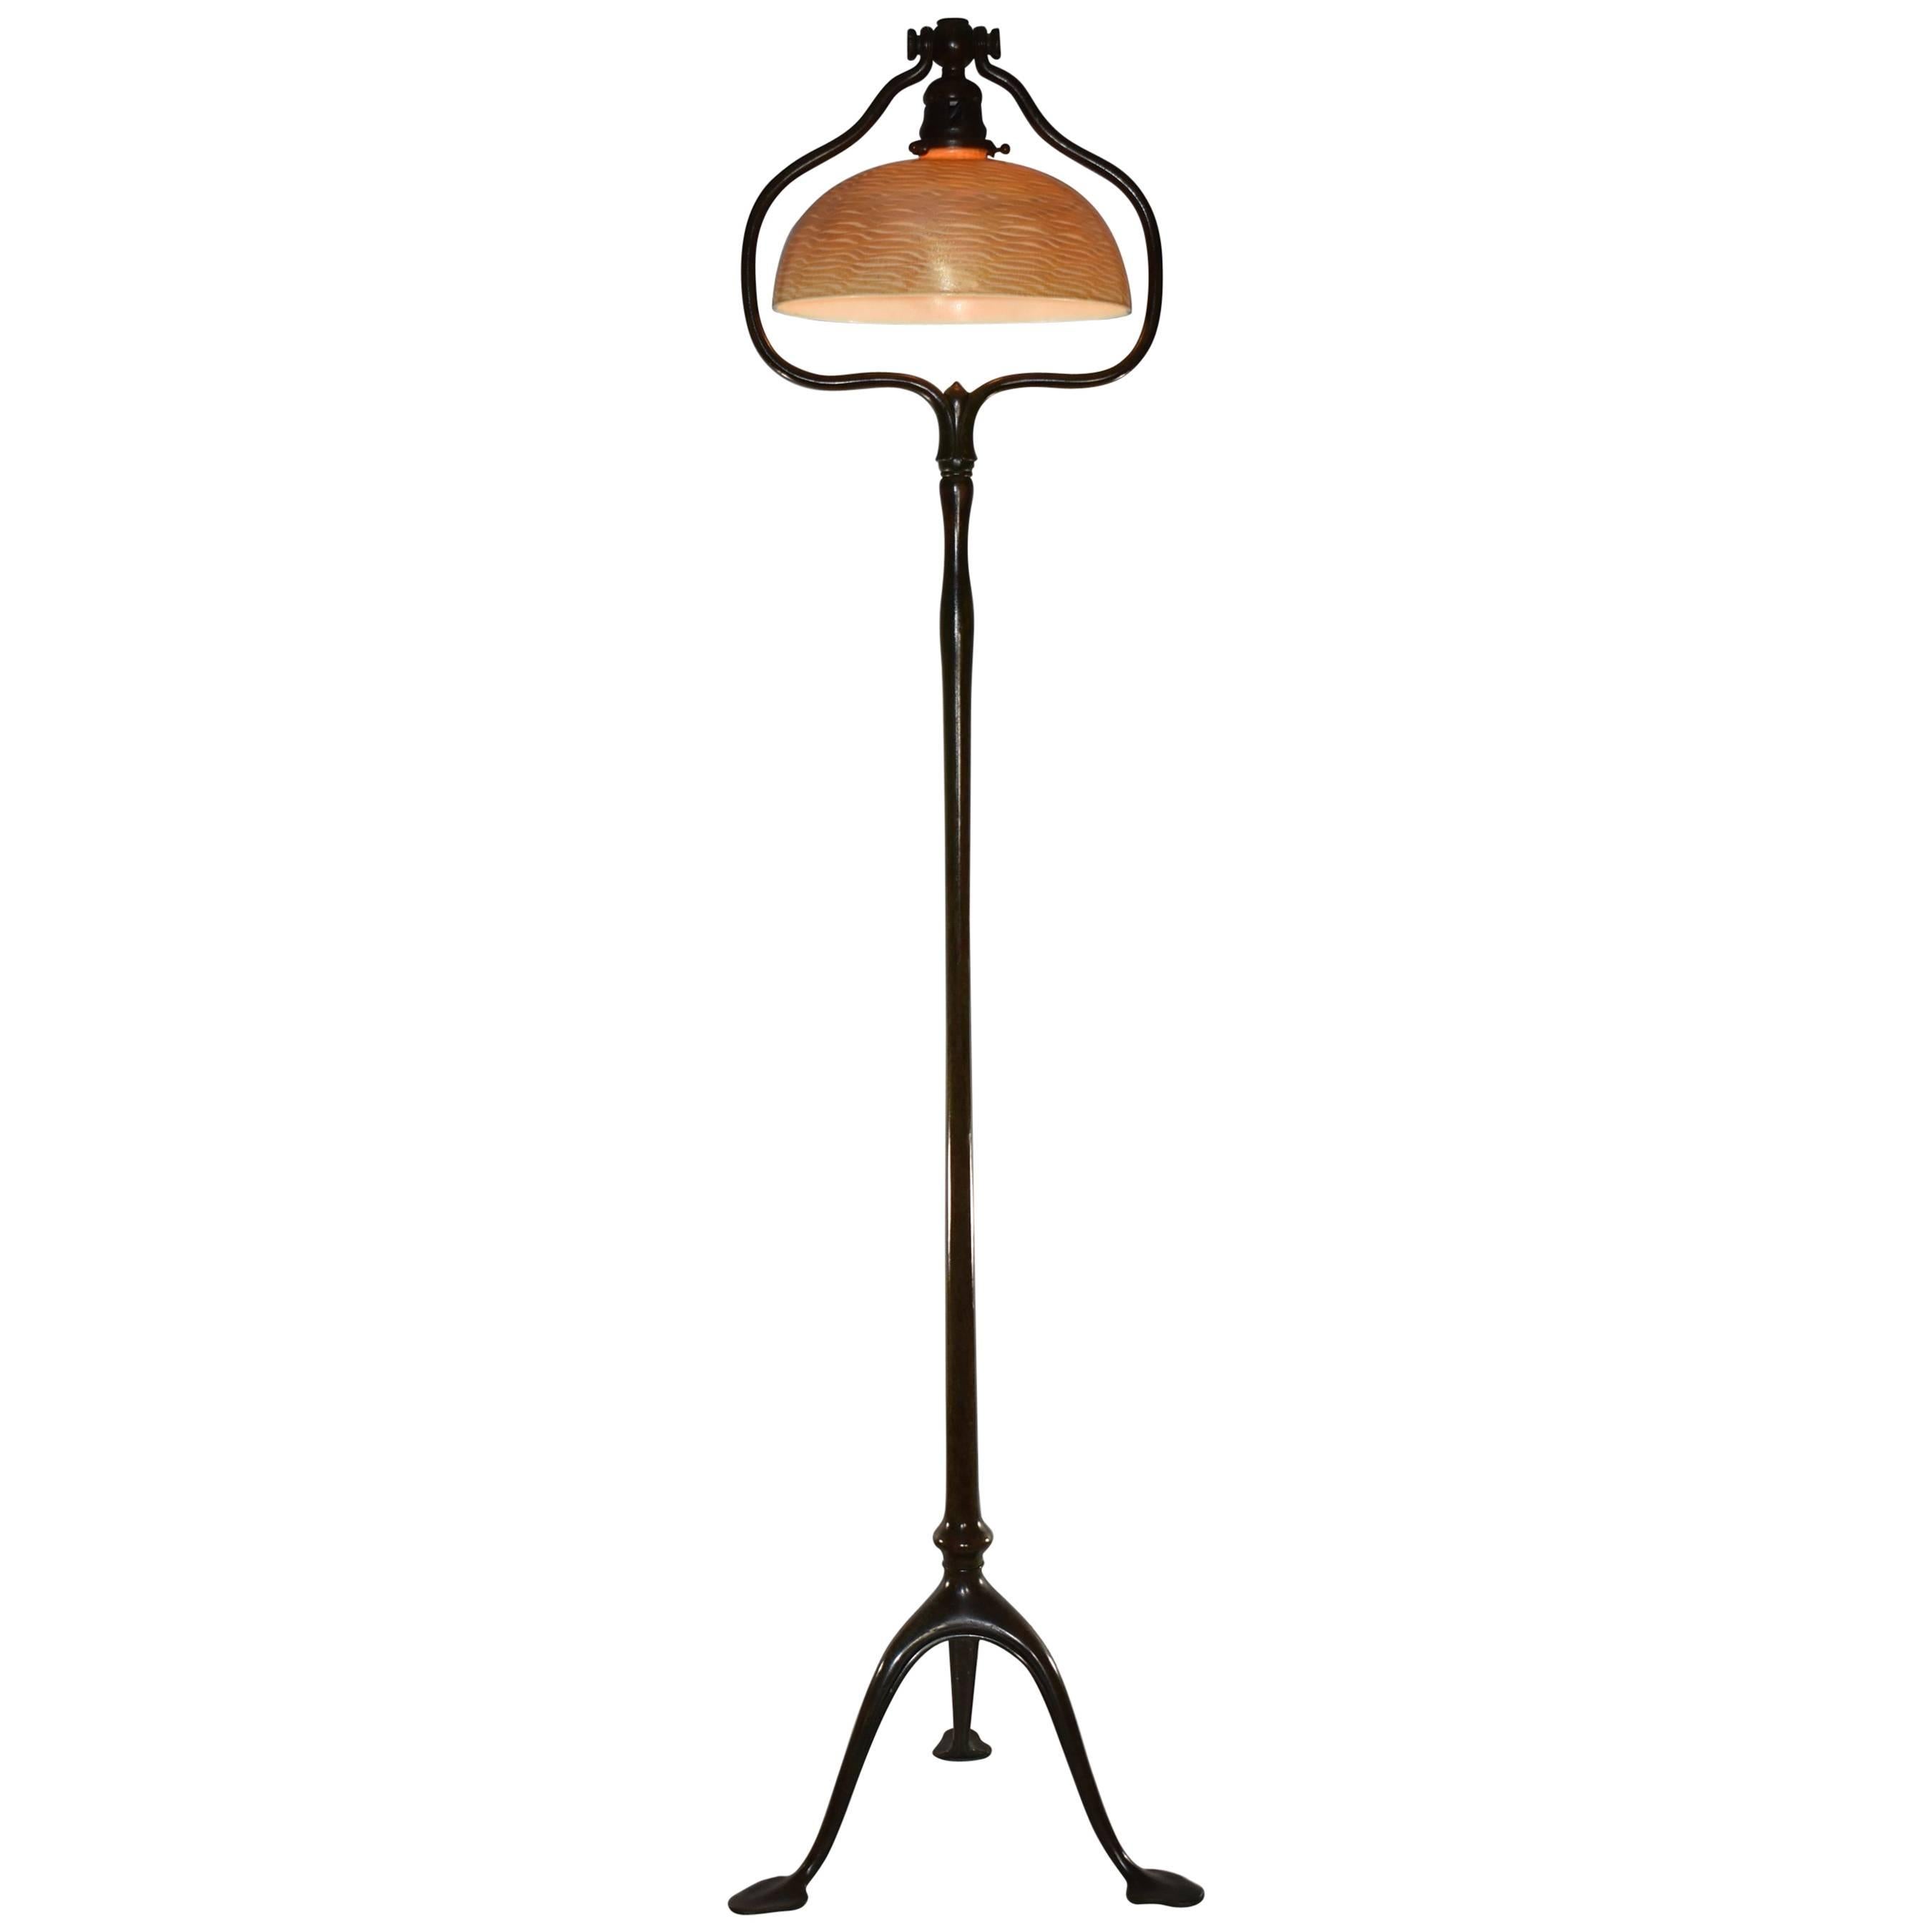 Tiffany Studios Favrile Bronze Floor Lamp with Damascene Glass Shade